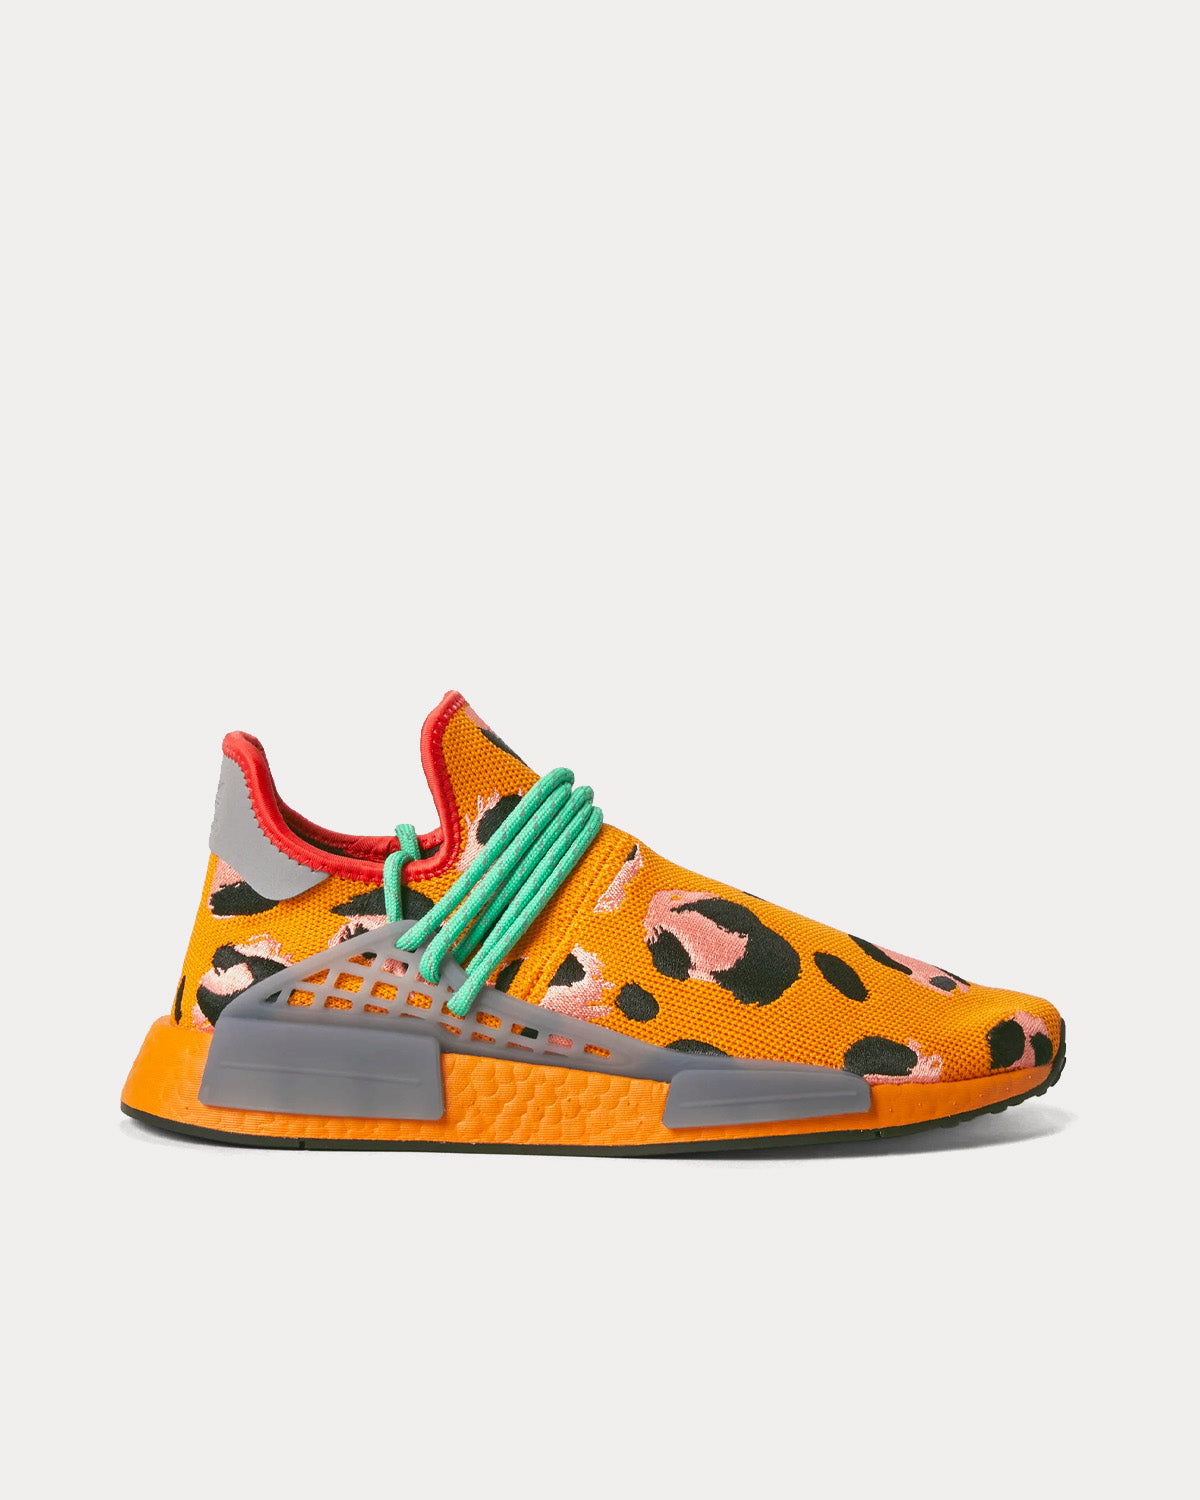 Adidas x Pharrell Williams - HU NMD Animal Print Focus Orange / Core Black / Screaming Green Low Top Sneakers